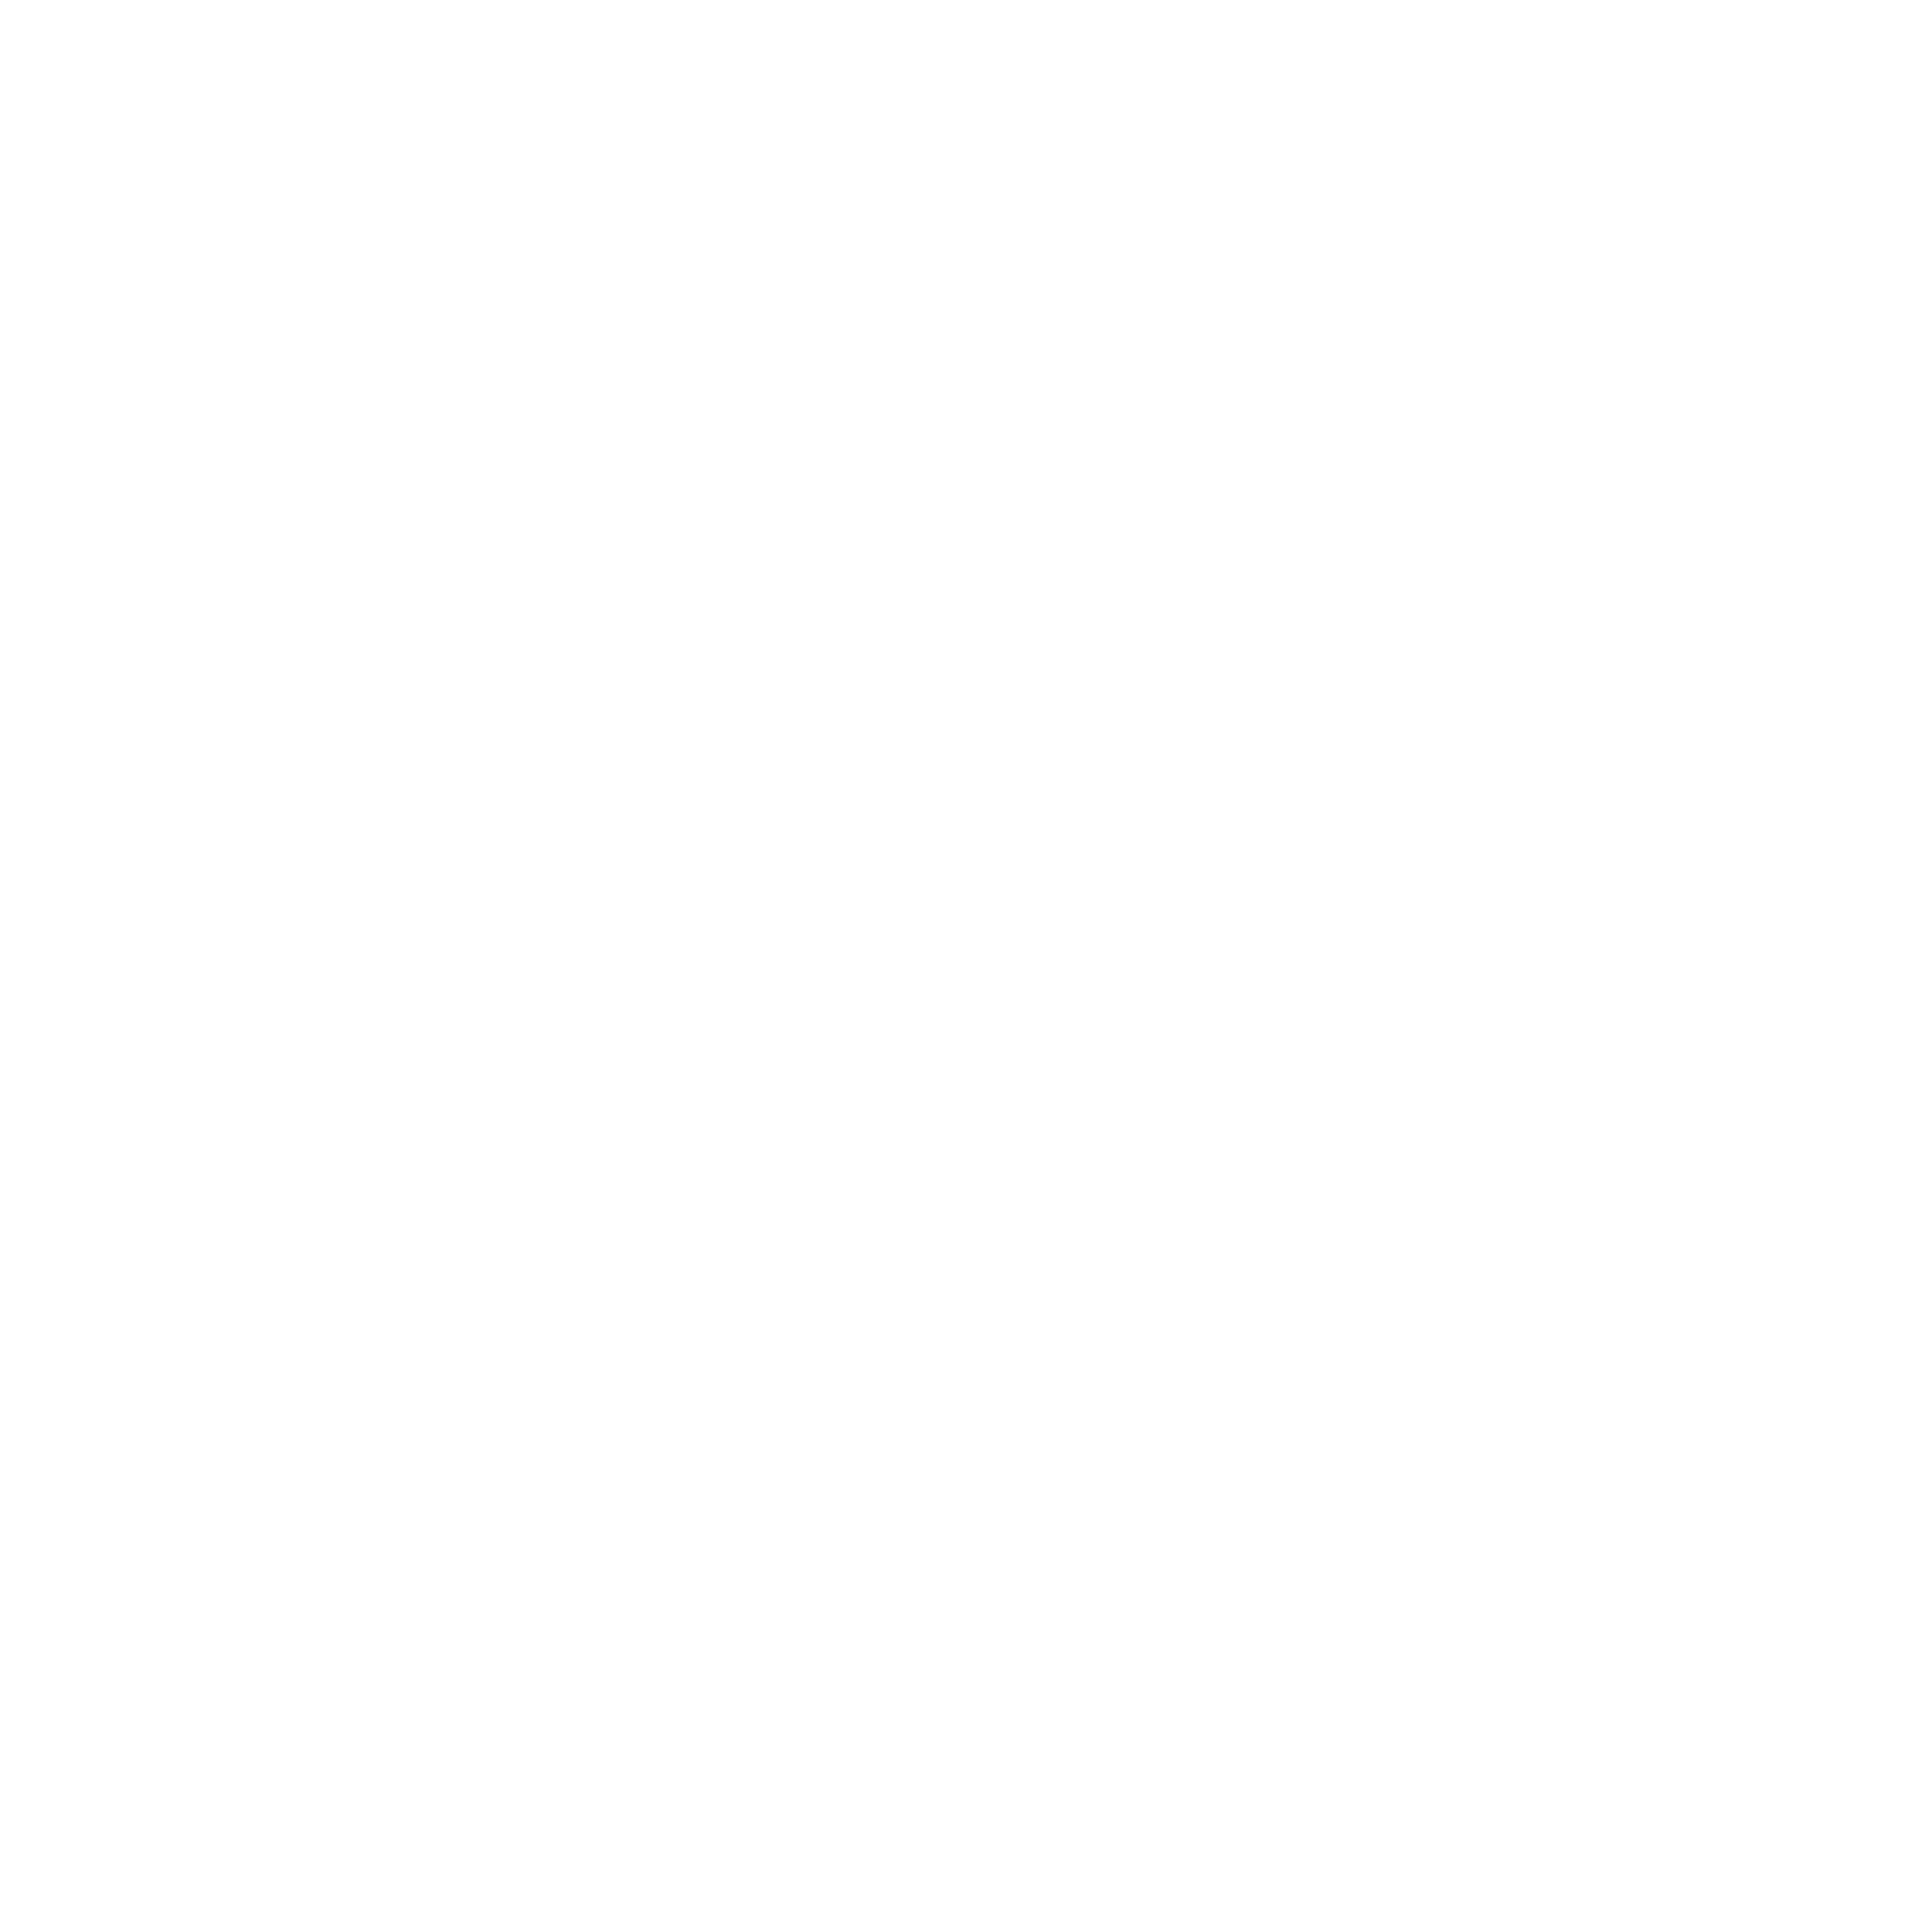 LOTZ & LOT